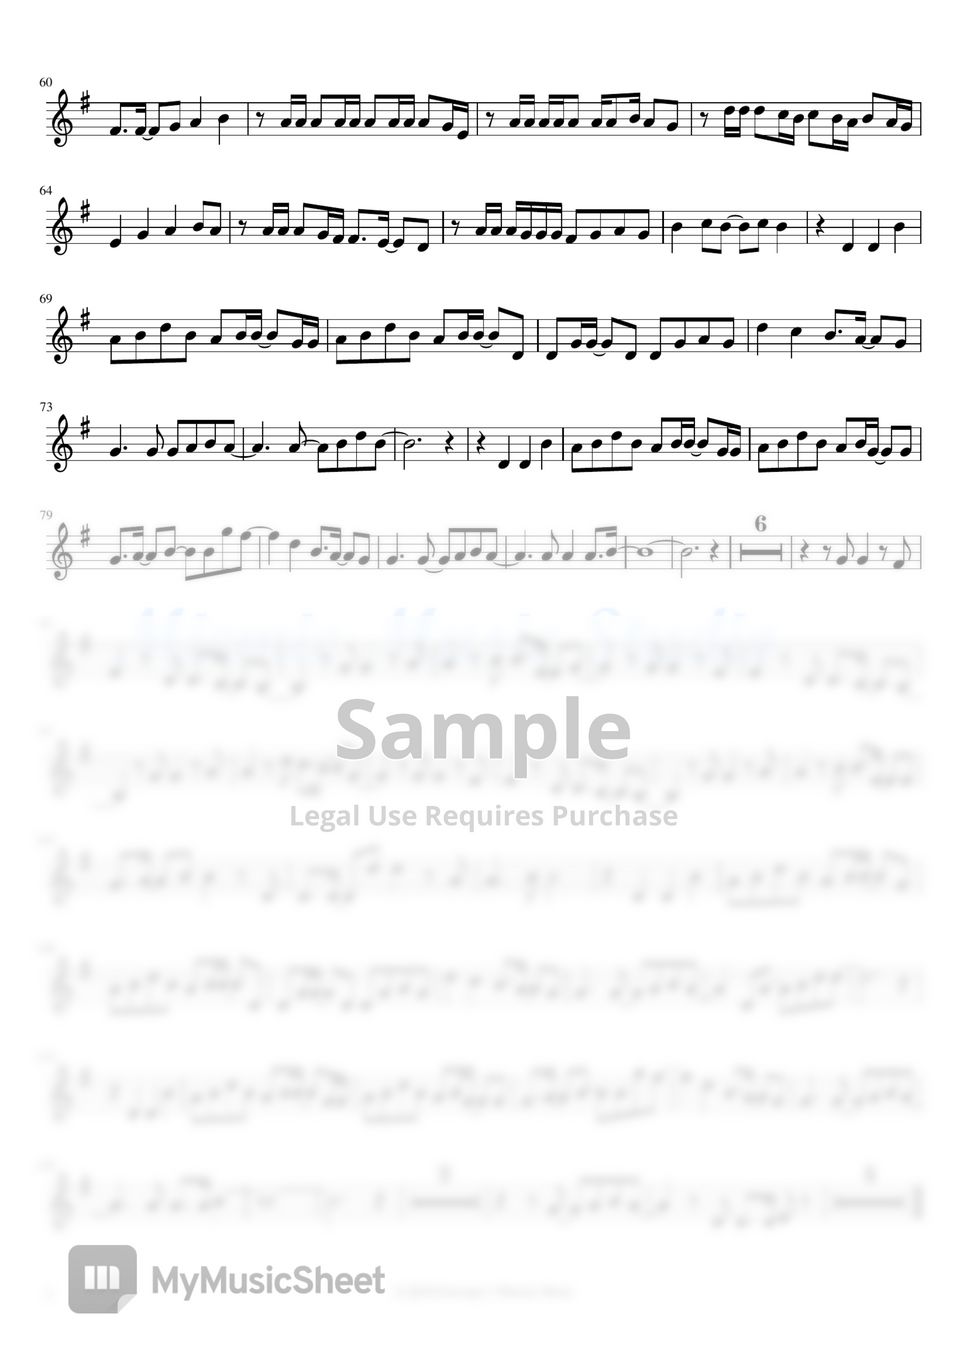 LiSA - 紅蓮華 (Cello sheets/大提琴譜) 鬼滅之刃主題曲 by Miemie Music Studio